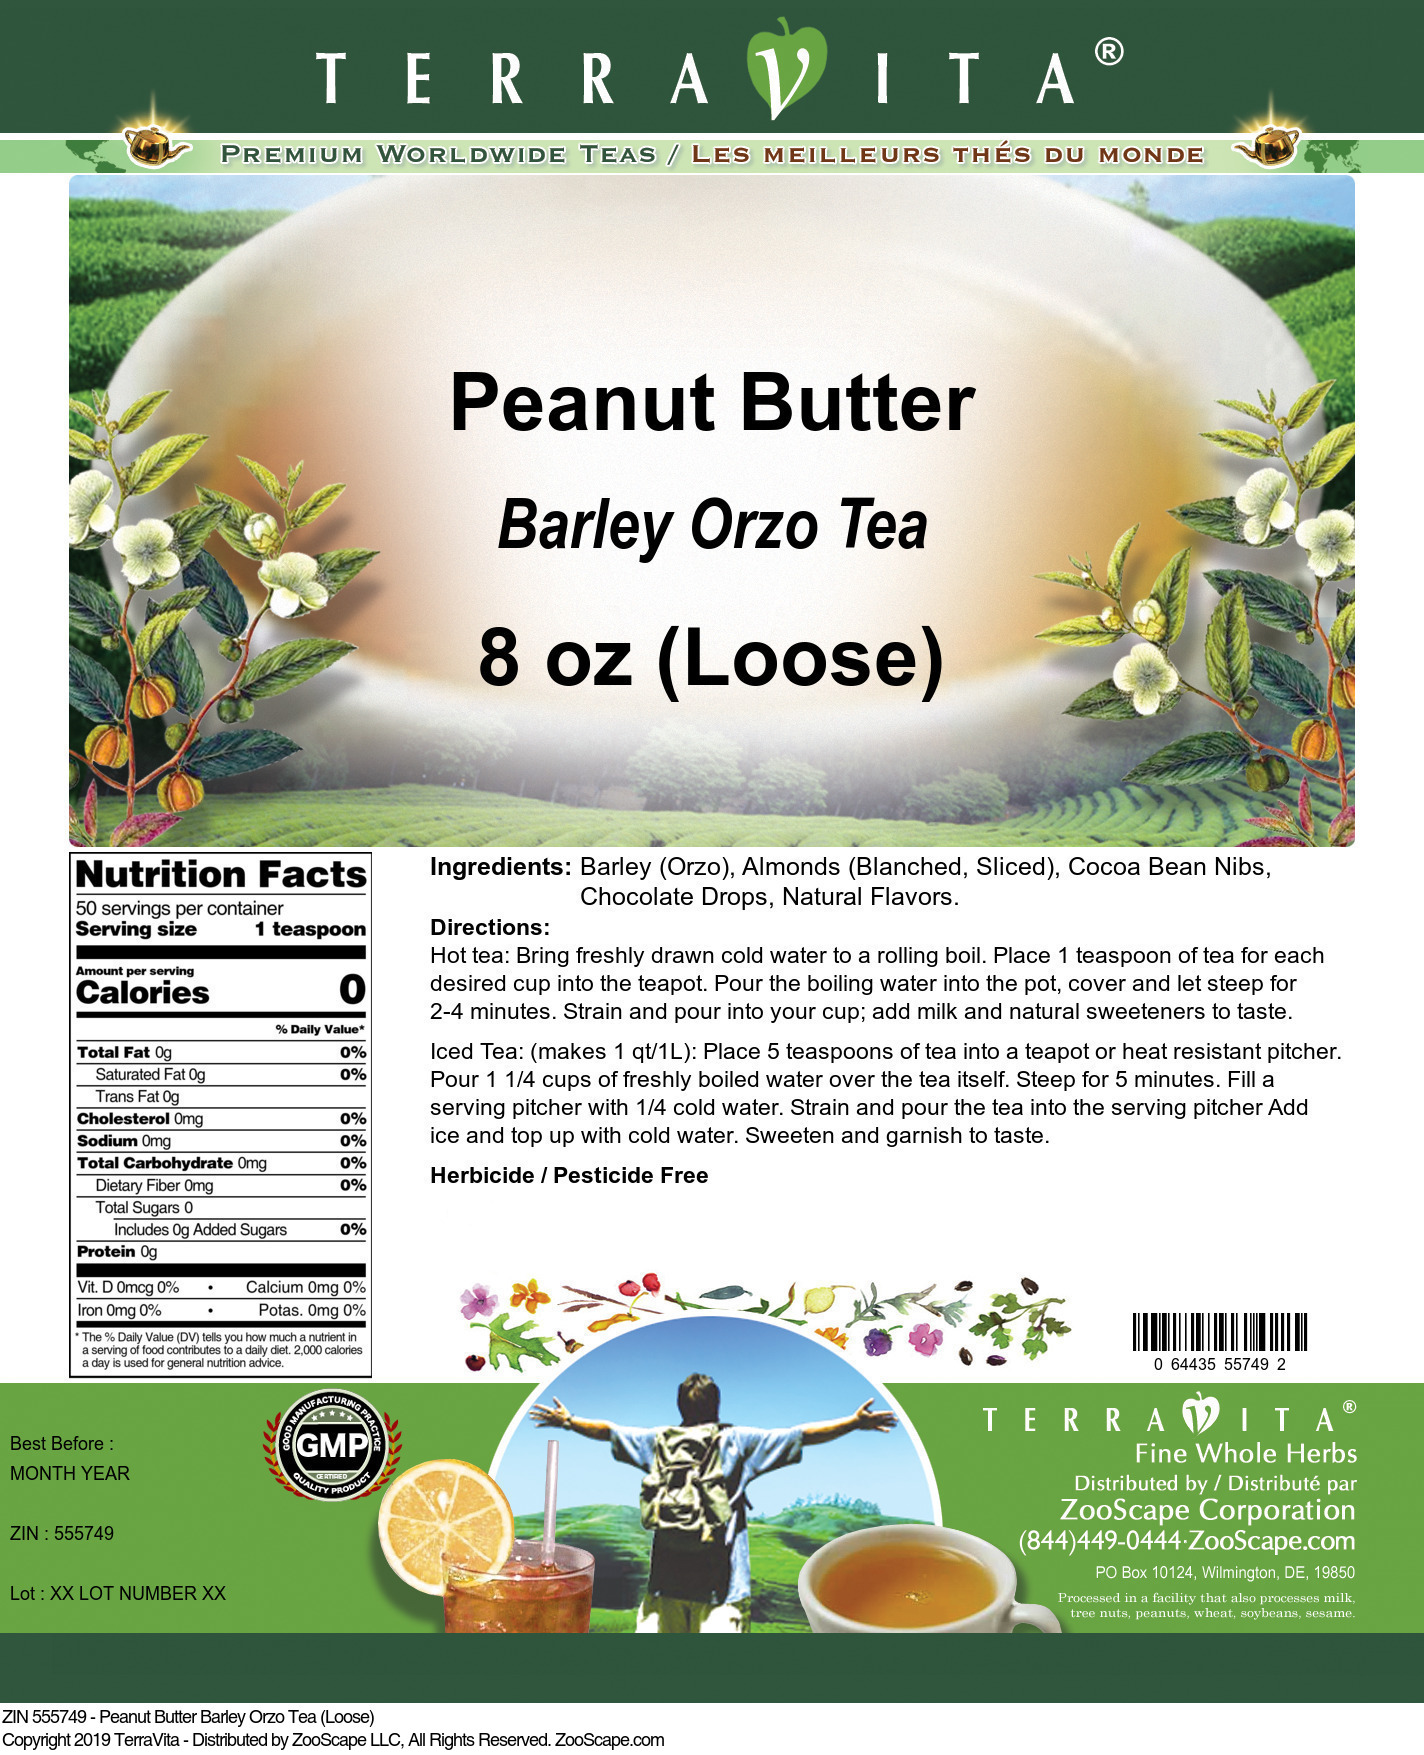 Peanut Butter Barley Orzo Tea (Loose) - Label